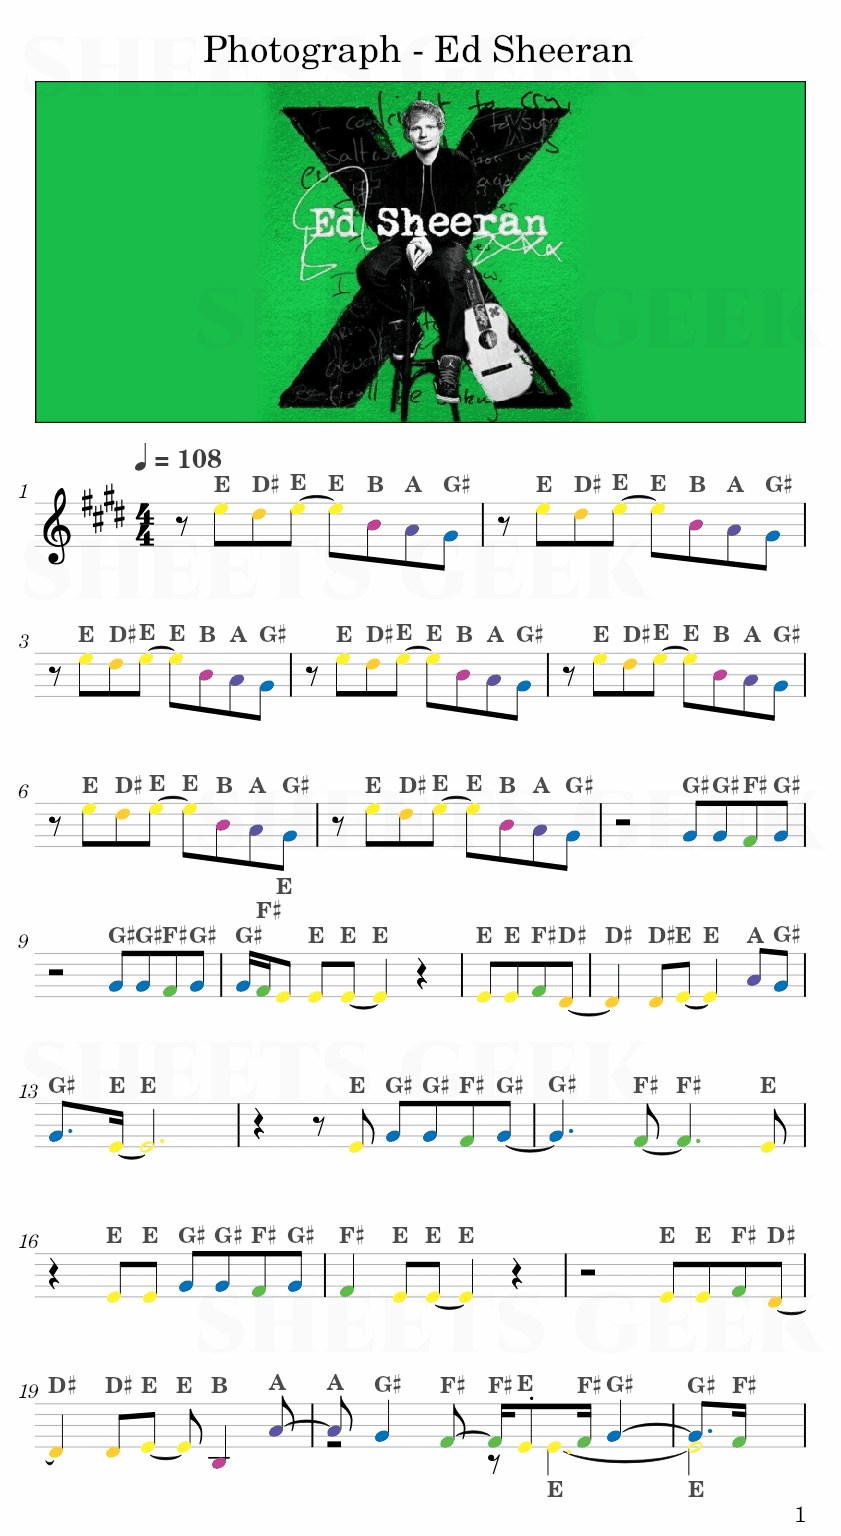 Photograph - Ed Sheeran Easy Sheet Music Free for piano, keyboard, flute, violin, sax, cello page 1